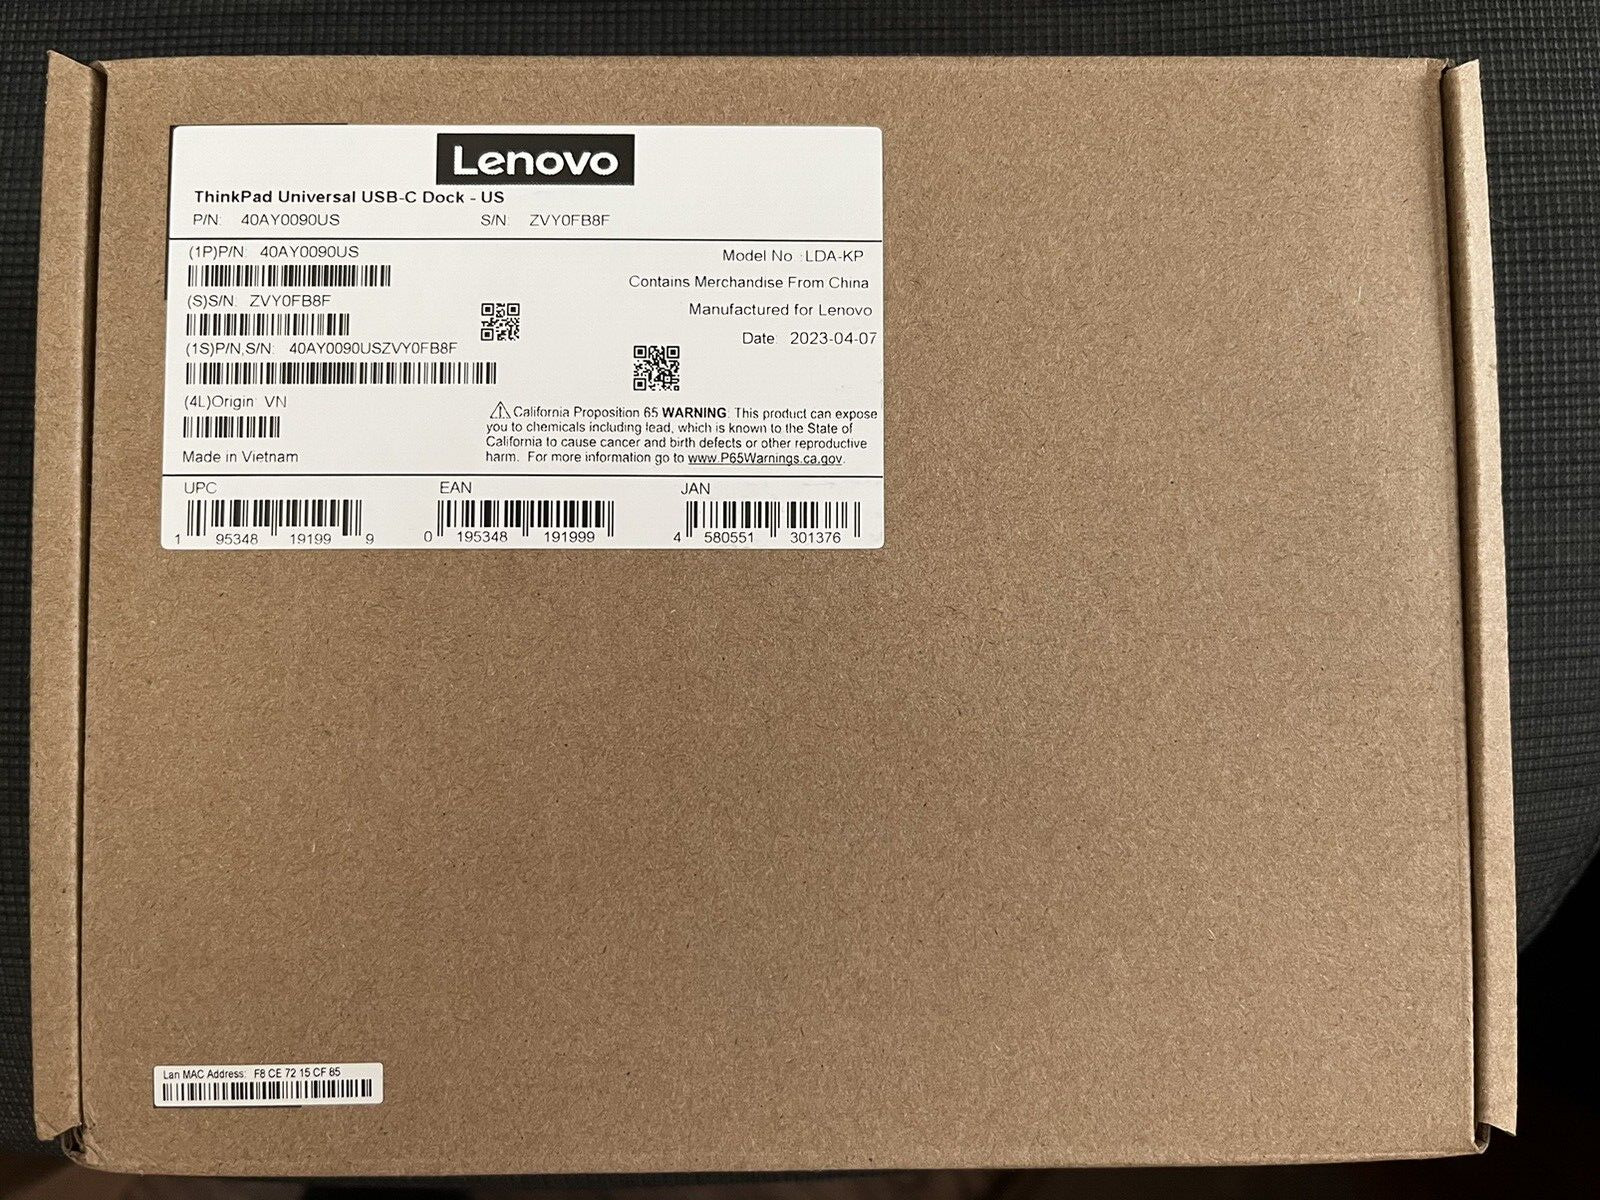 Lenovo ThinkPad Universal USB Type-C Dock 40AY0090US Brand NEW IN ORIGINAL BOX